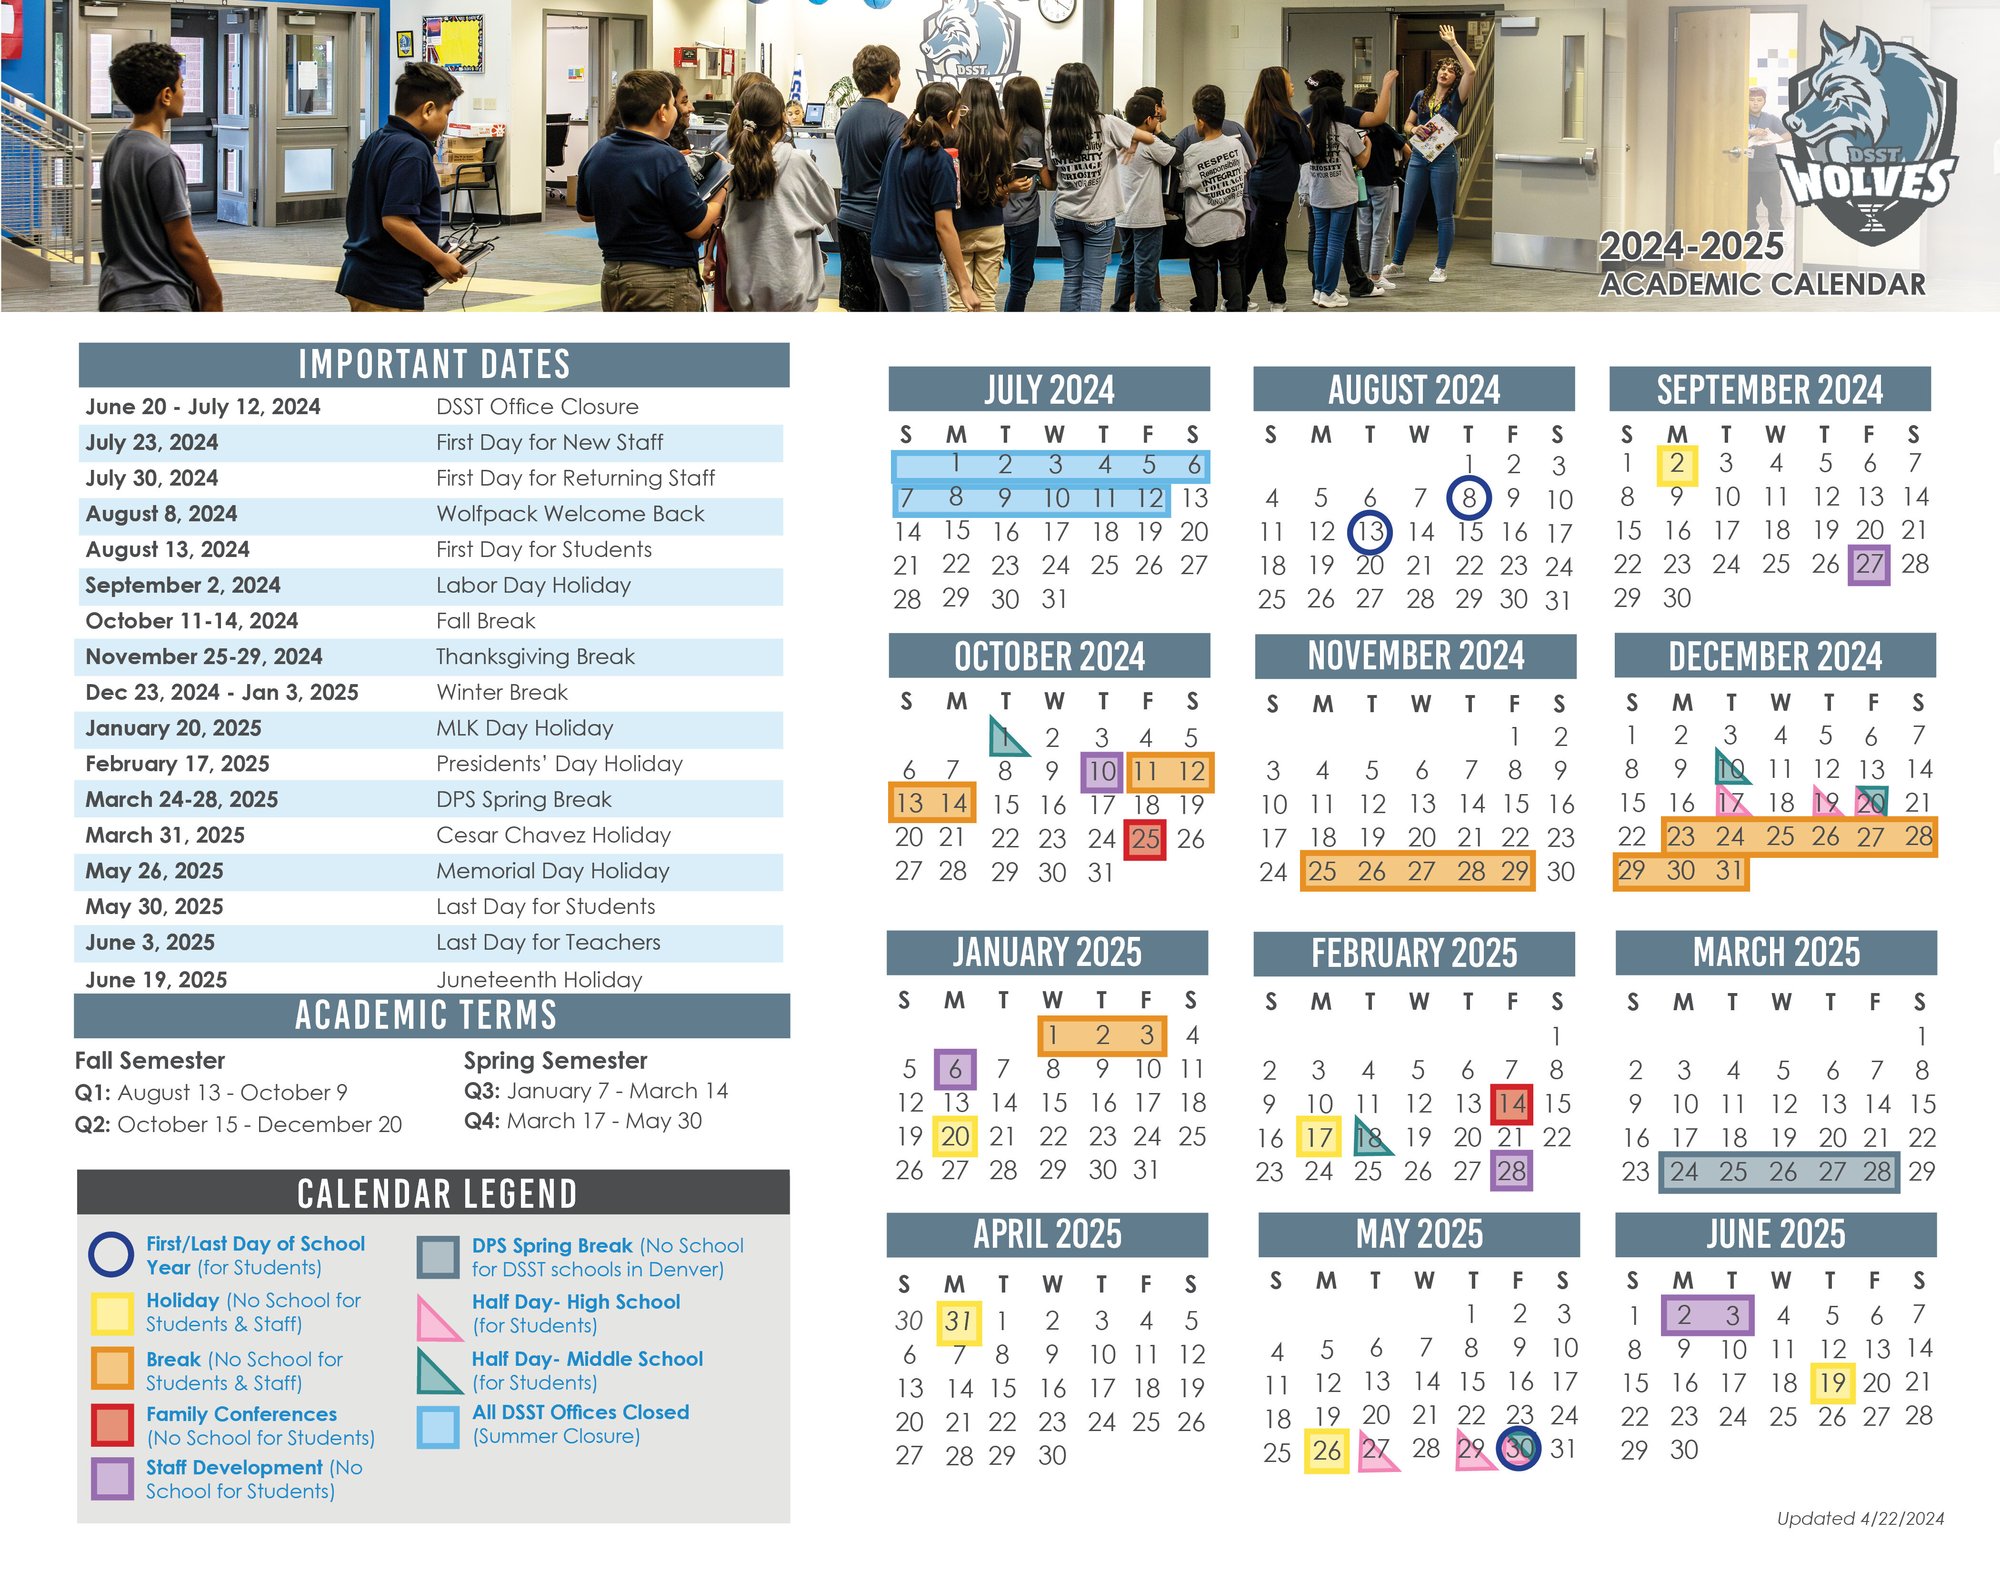 CV MS and HS Calendar 24-25